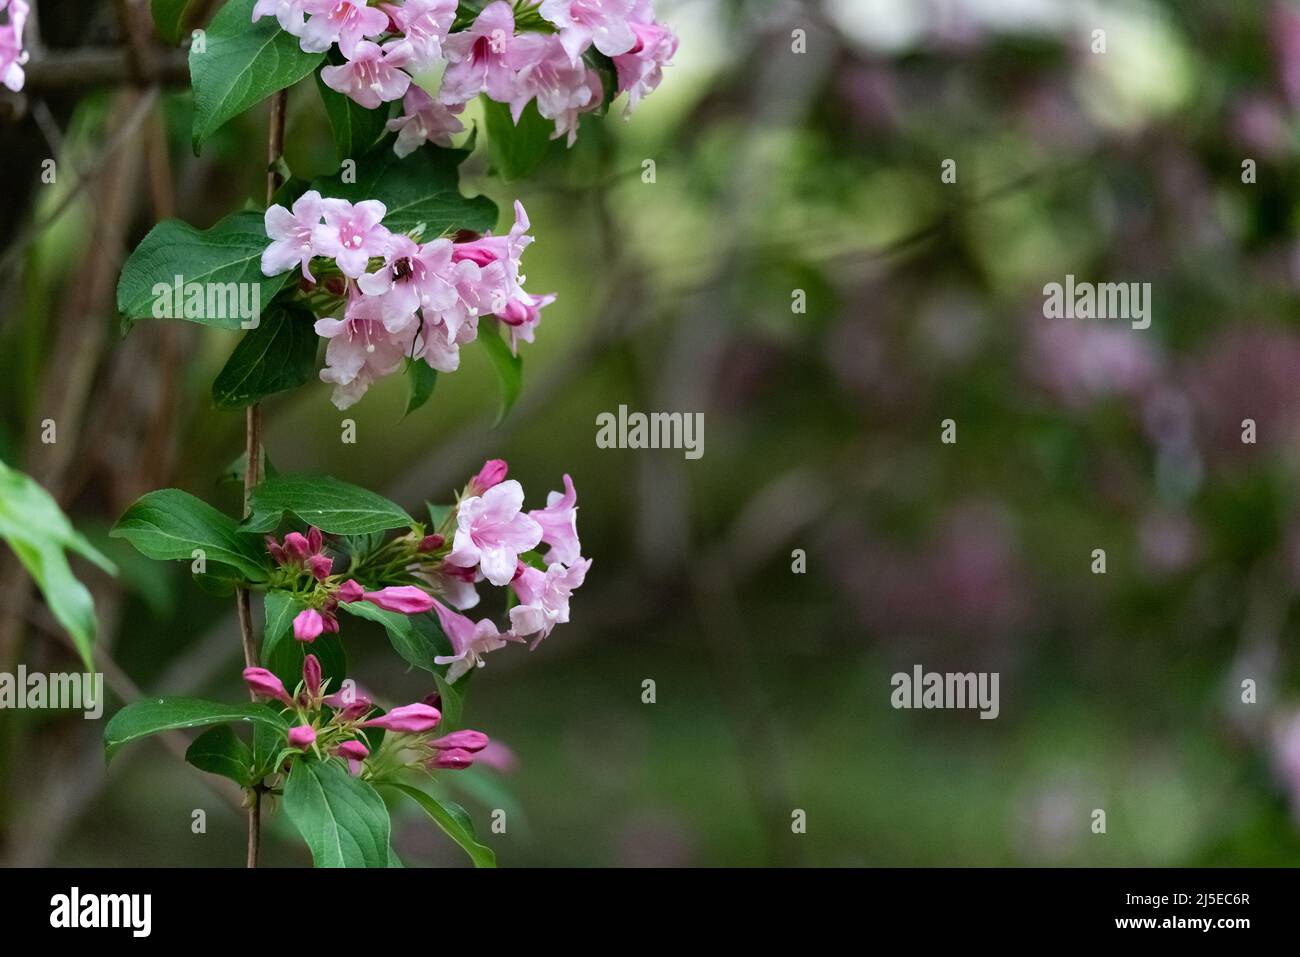 A wonderful shrub, flowering ornamental shrub with pink flowers. Stock Photo